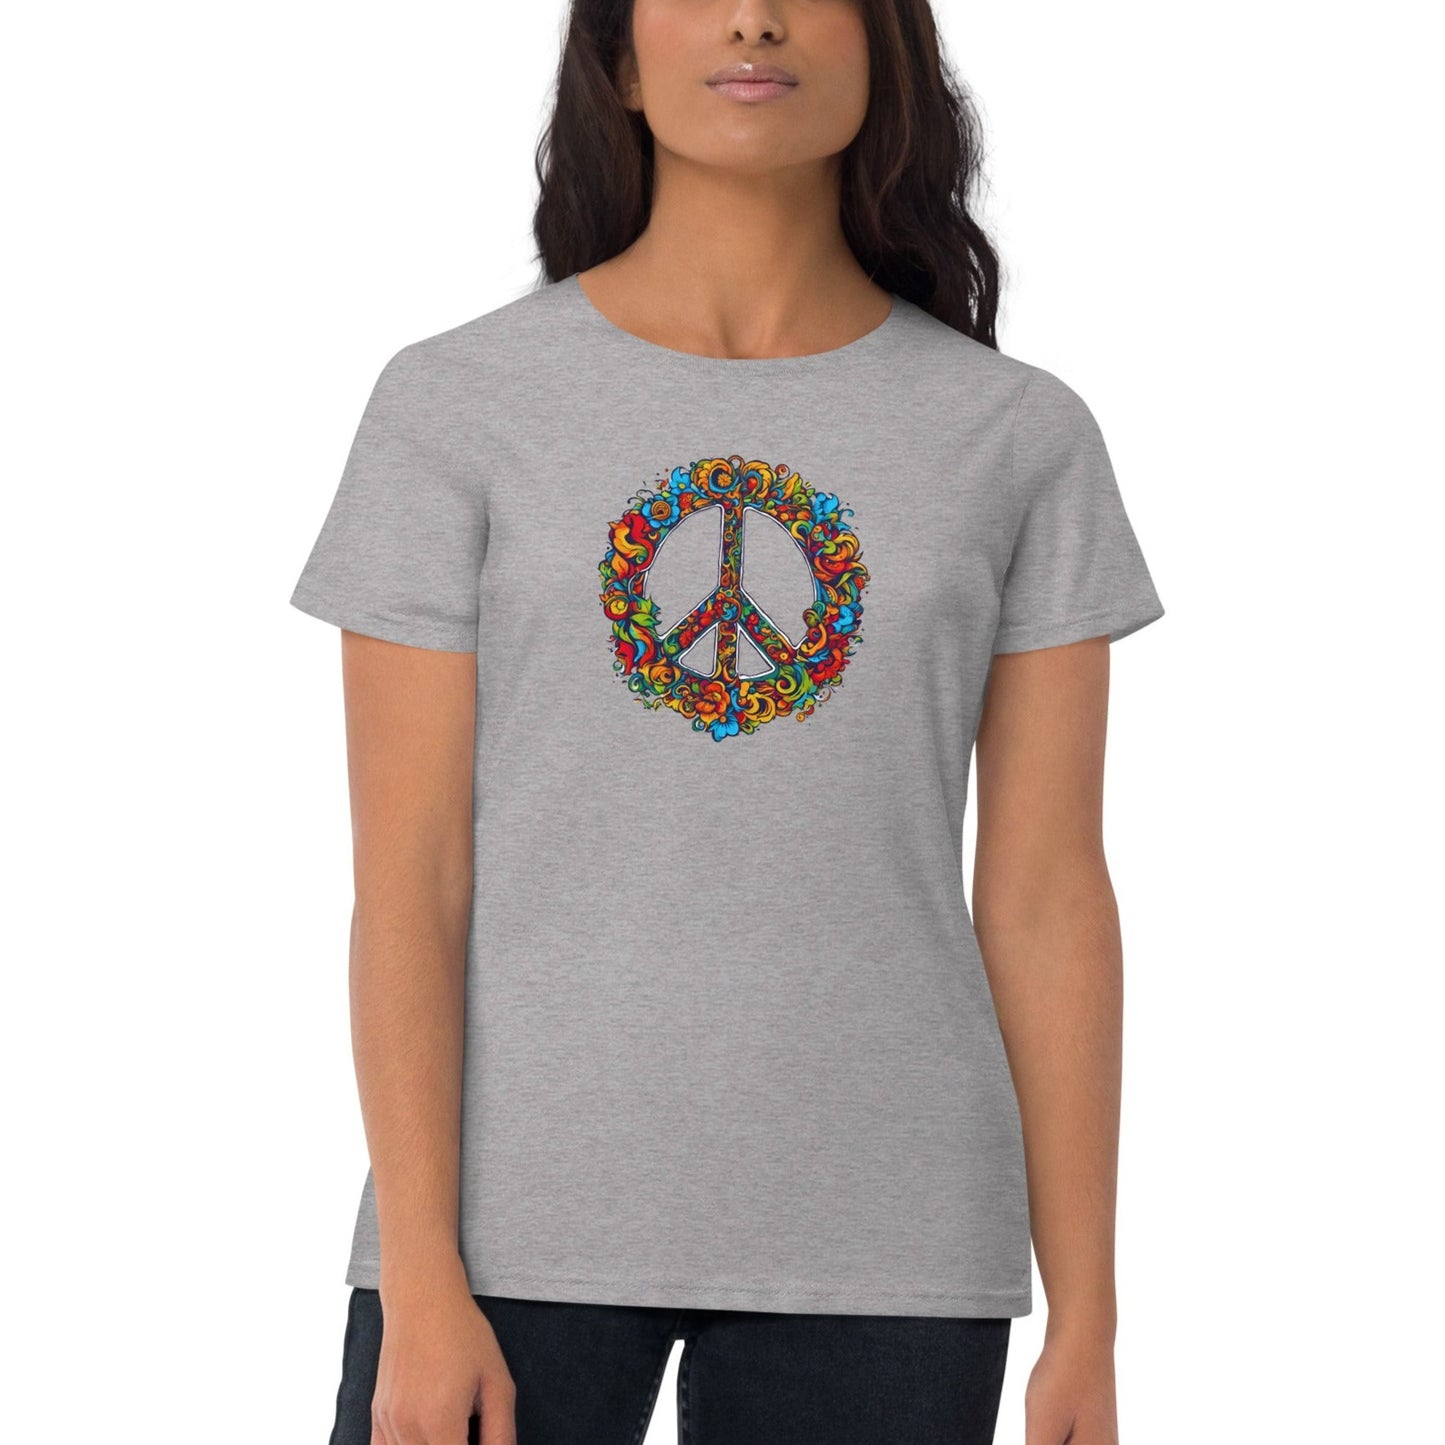 PEACE Women's Fashion Fit T-shirt